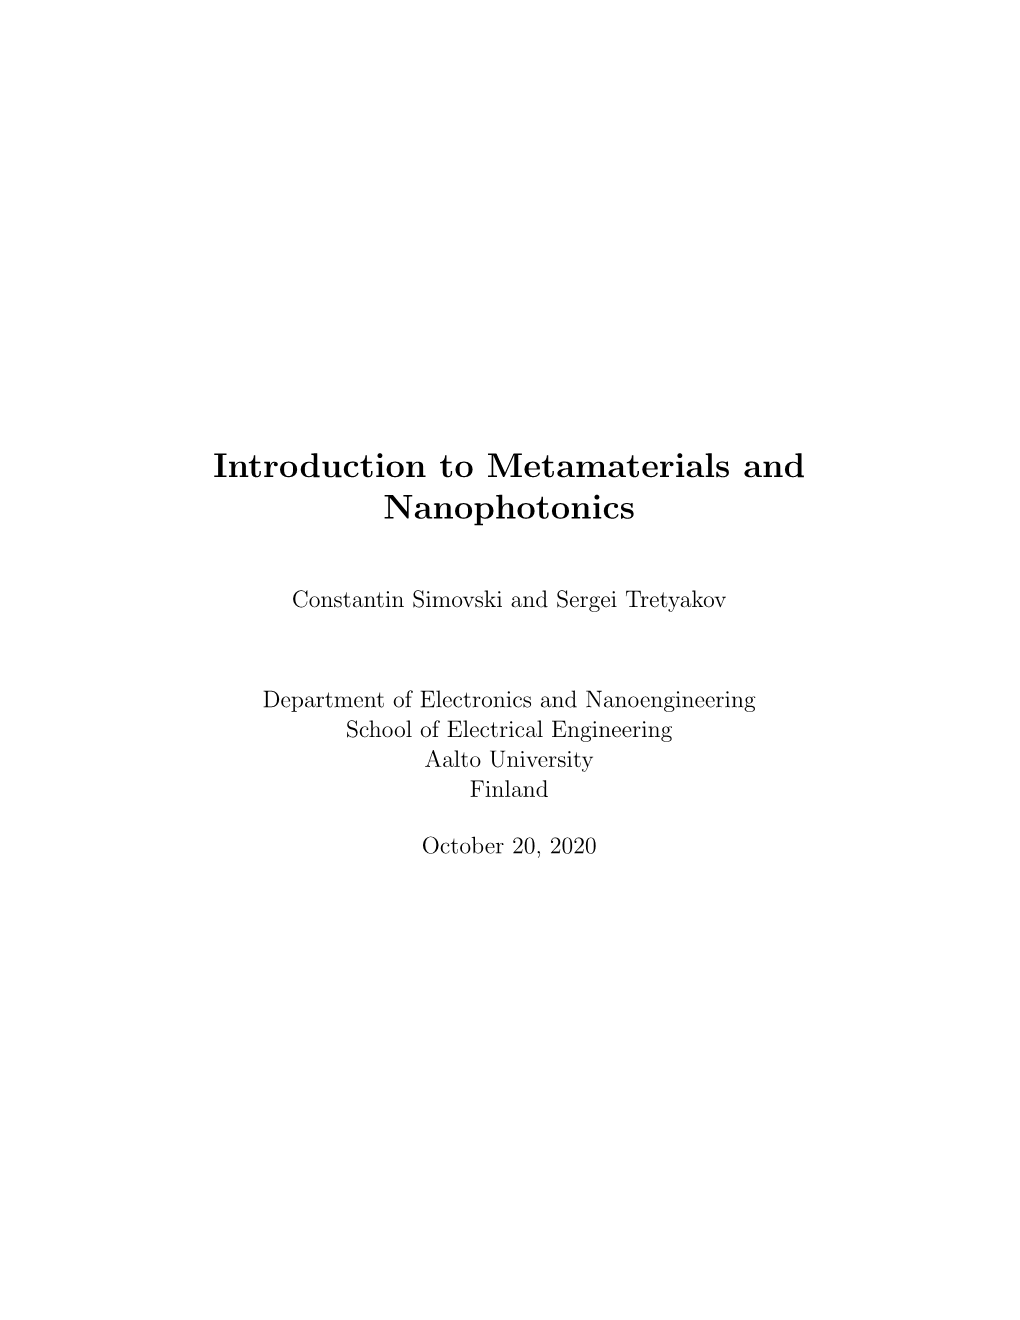 Introduction to Metamaterials and Nanophotonics